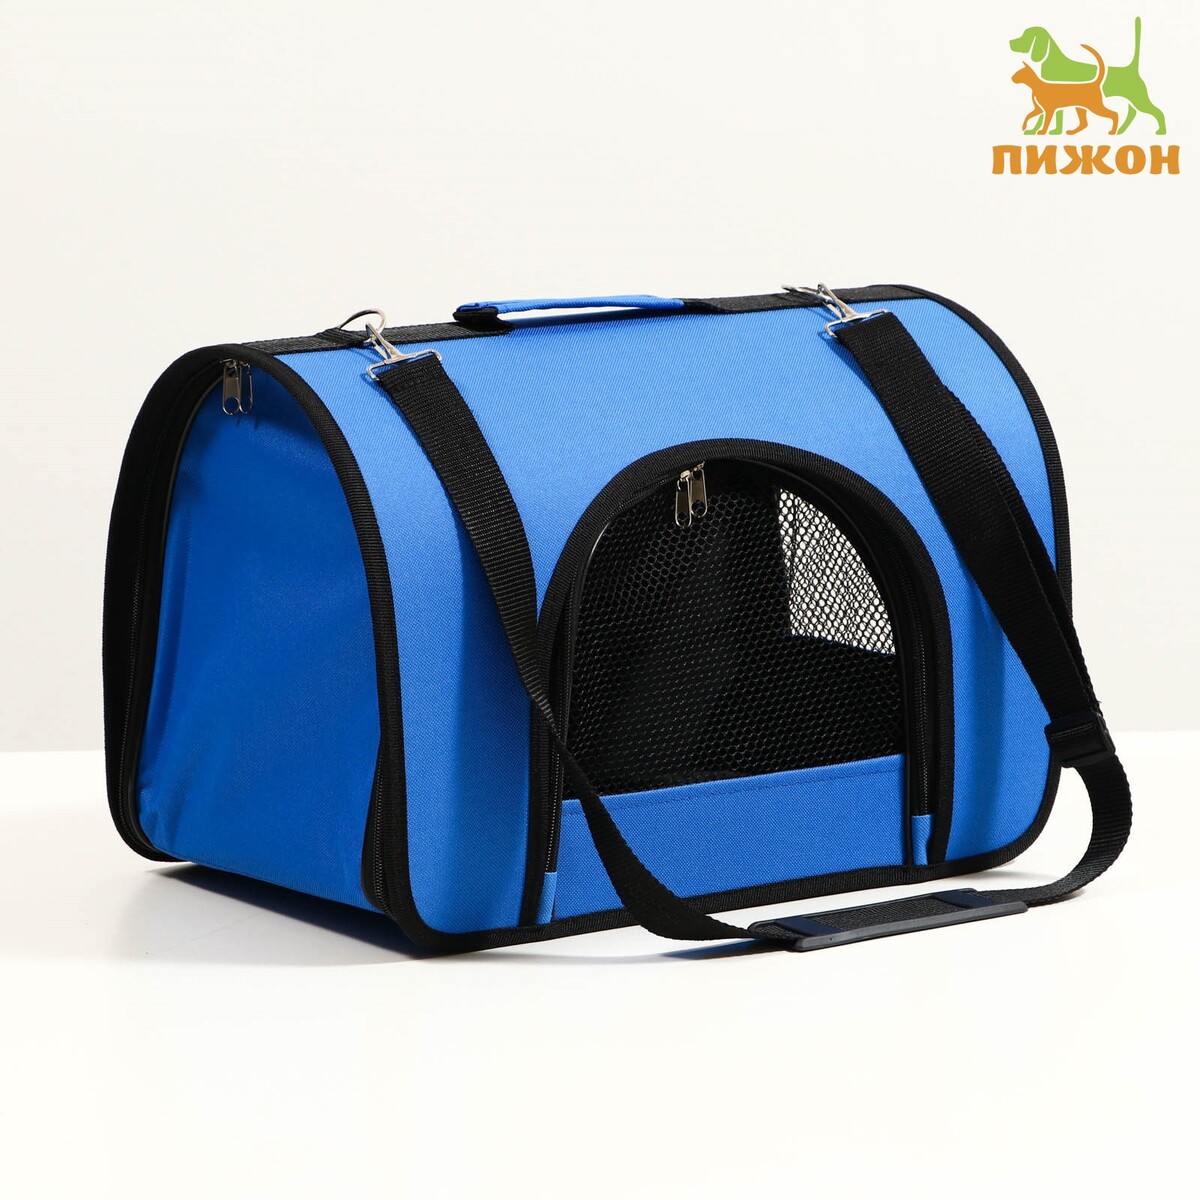 Сумка - переноска для животных, 2 входа, 40 х 25 х 28 см, синяя сумка для лакомств с карманом для пакетов 18 х 10 х 18 см синяя